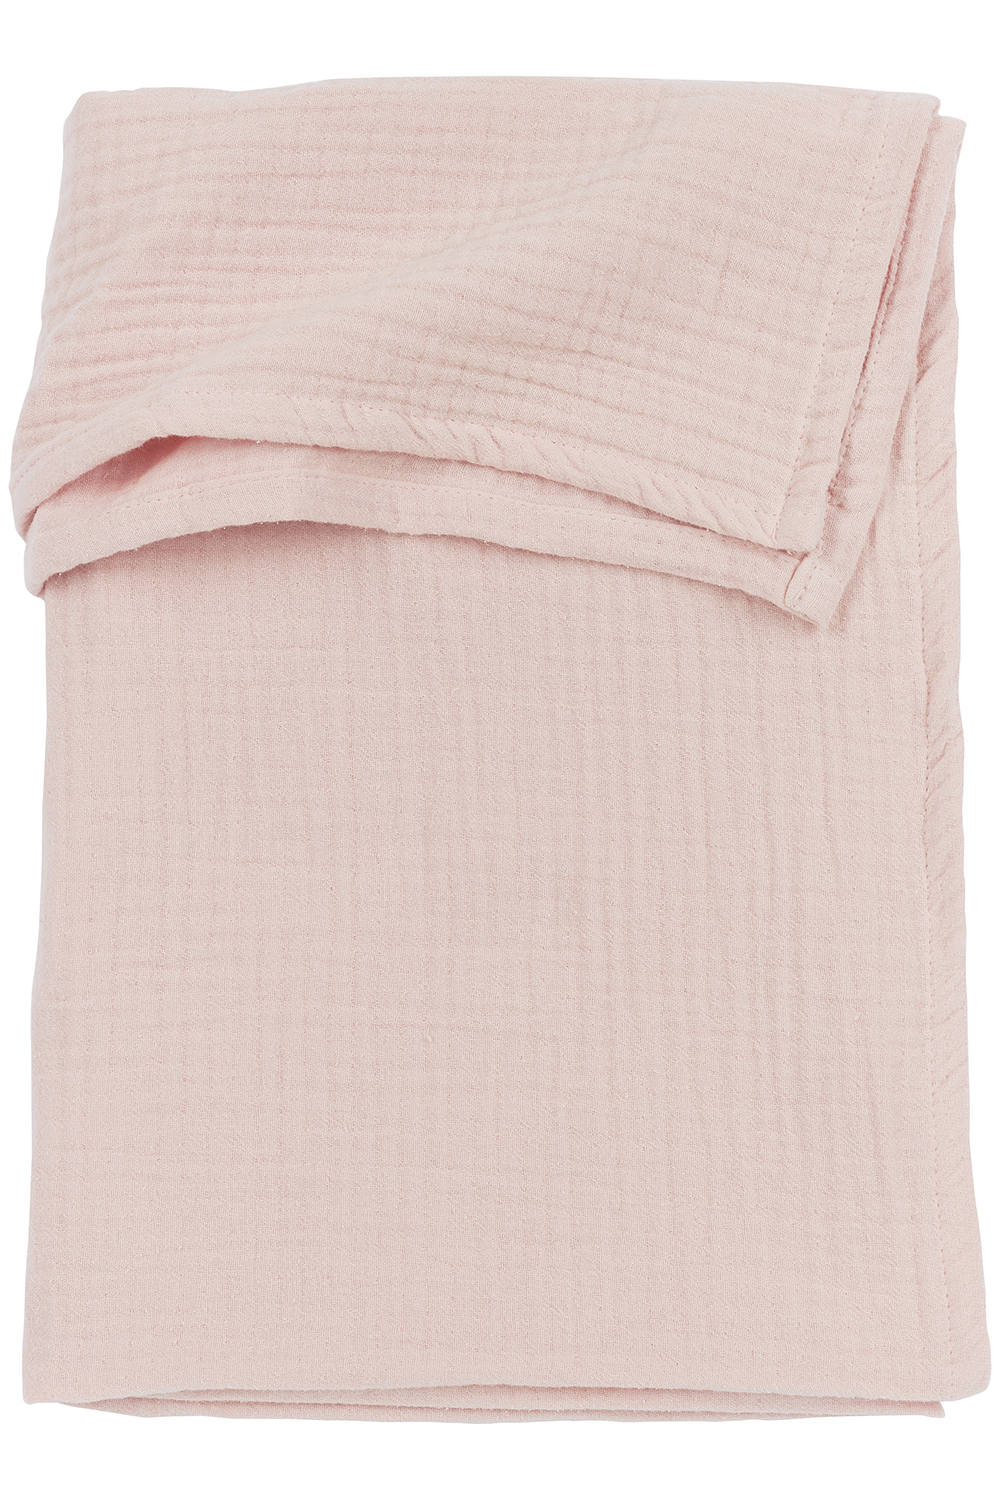 Crib sheet muslin Uni - soft pink - 75X100cm